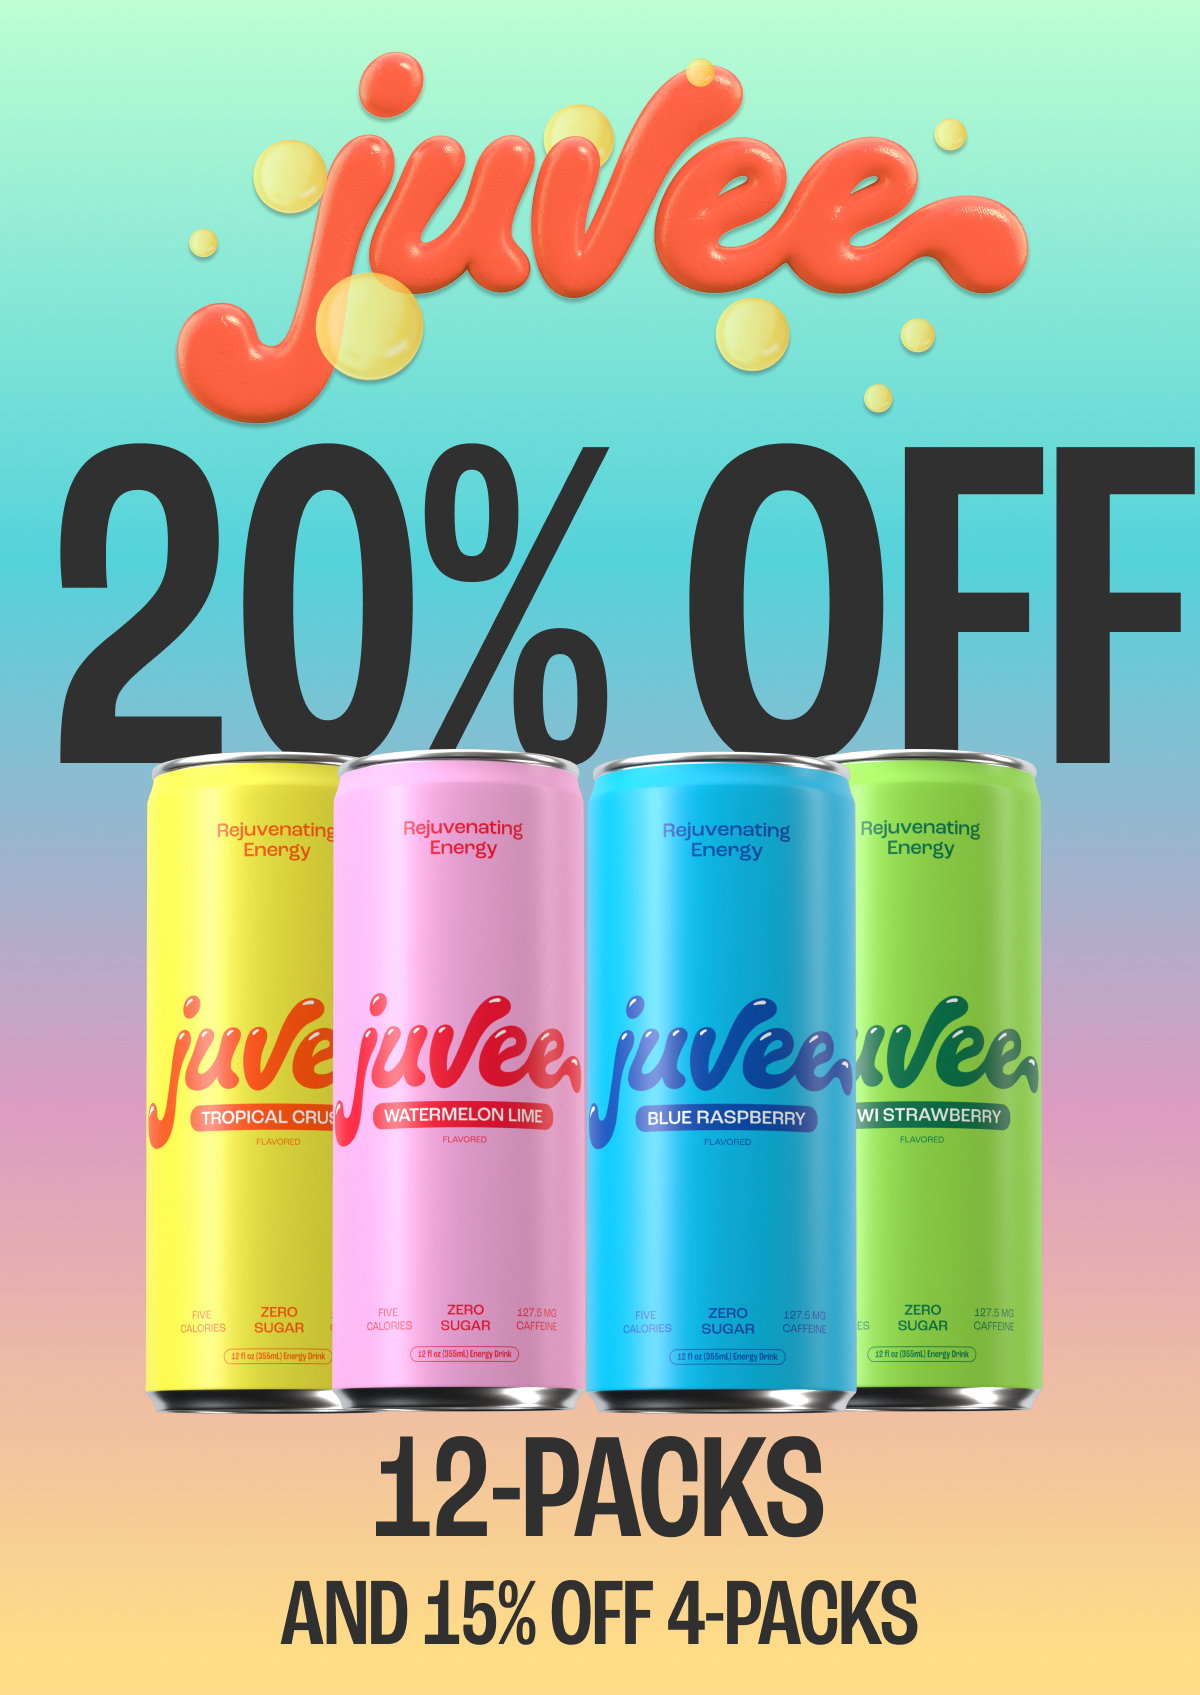 Juvee Rejuvenating Energy Drink - Cherry Slushie